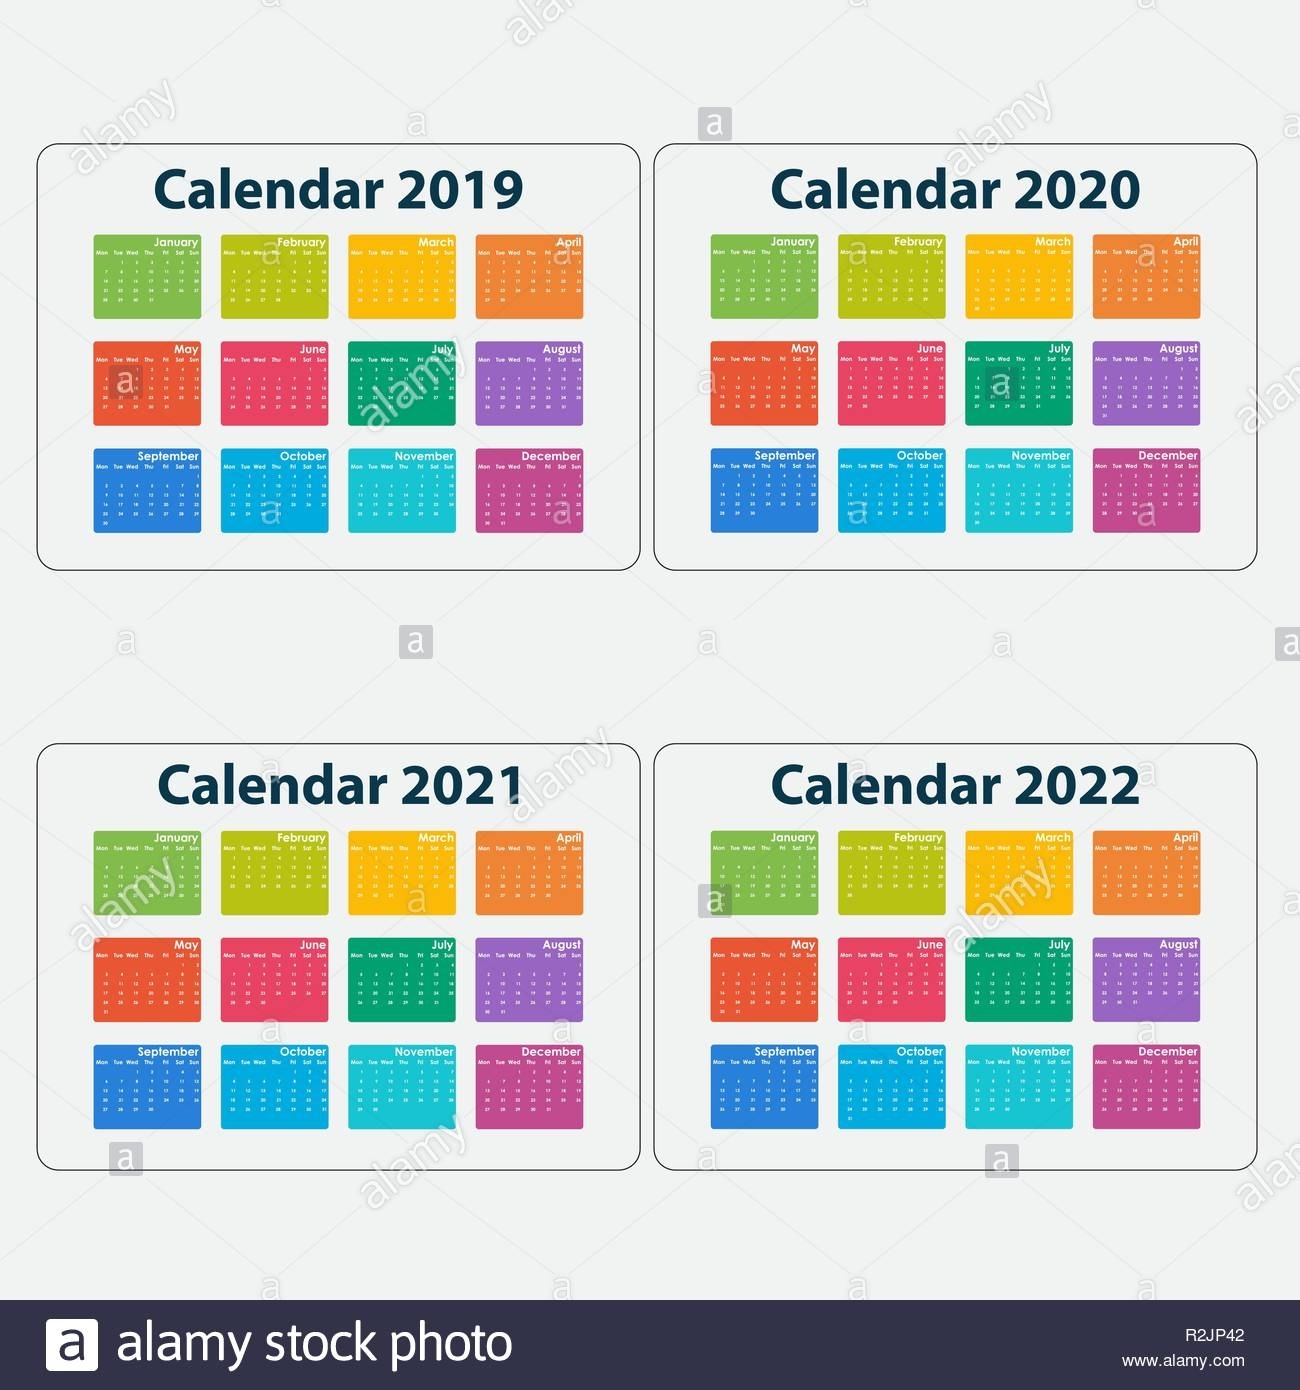 Calendar 2019, Calendar 2020, Calendar 2021 And 2022 Template Dashing 3 Year Calendar 2020 To 2022